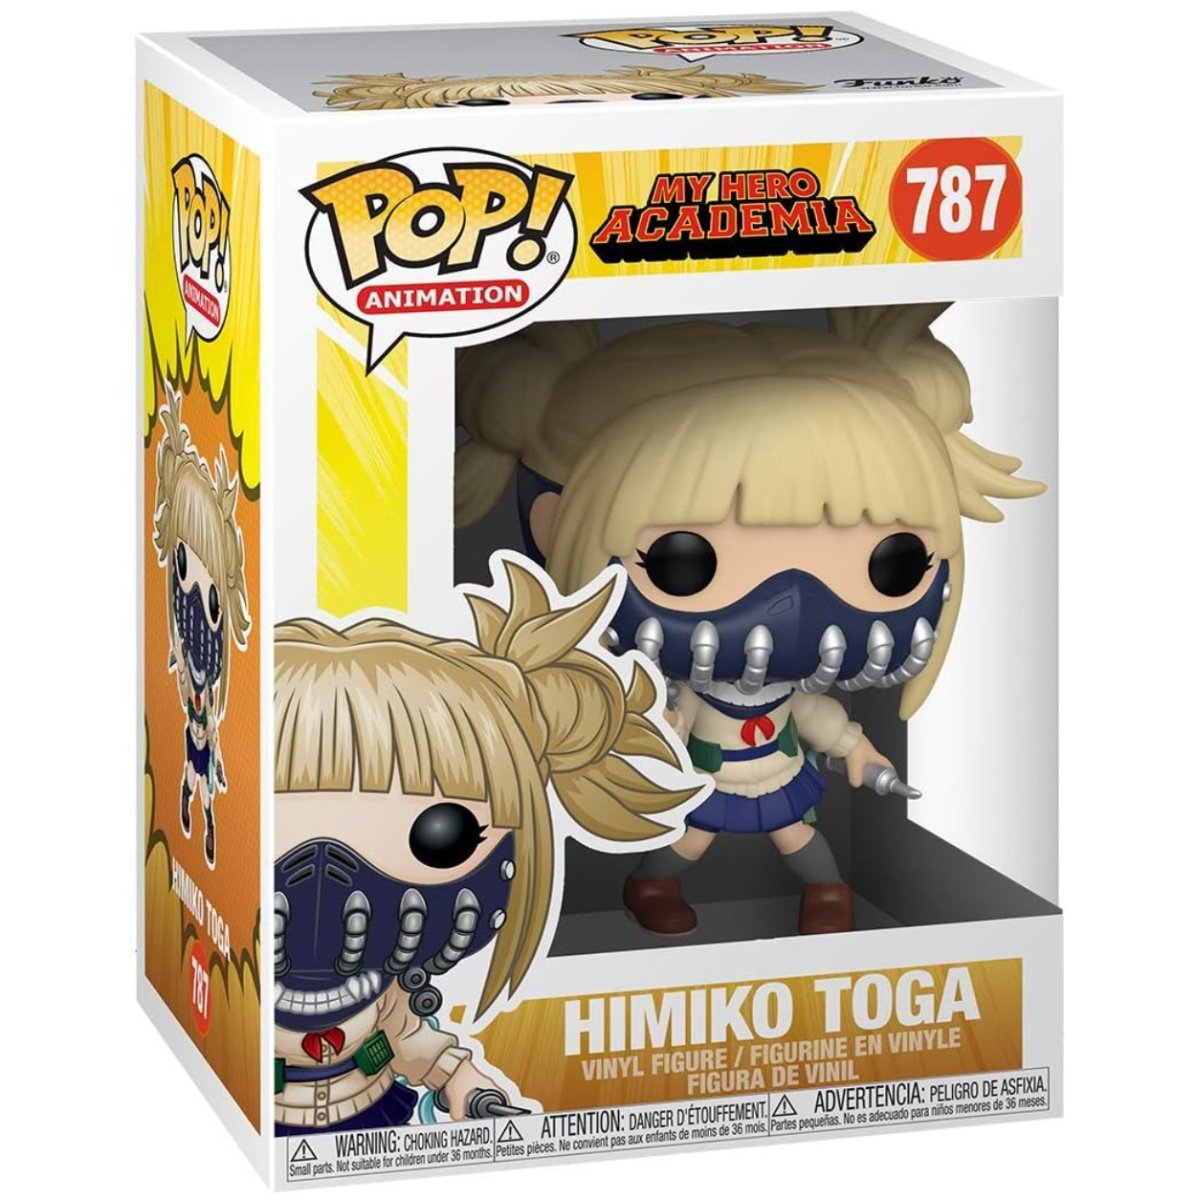 My Hero Academia - Himiko Toga #787 - Funko Pop! Vinyl Anime - Persona Toys